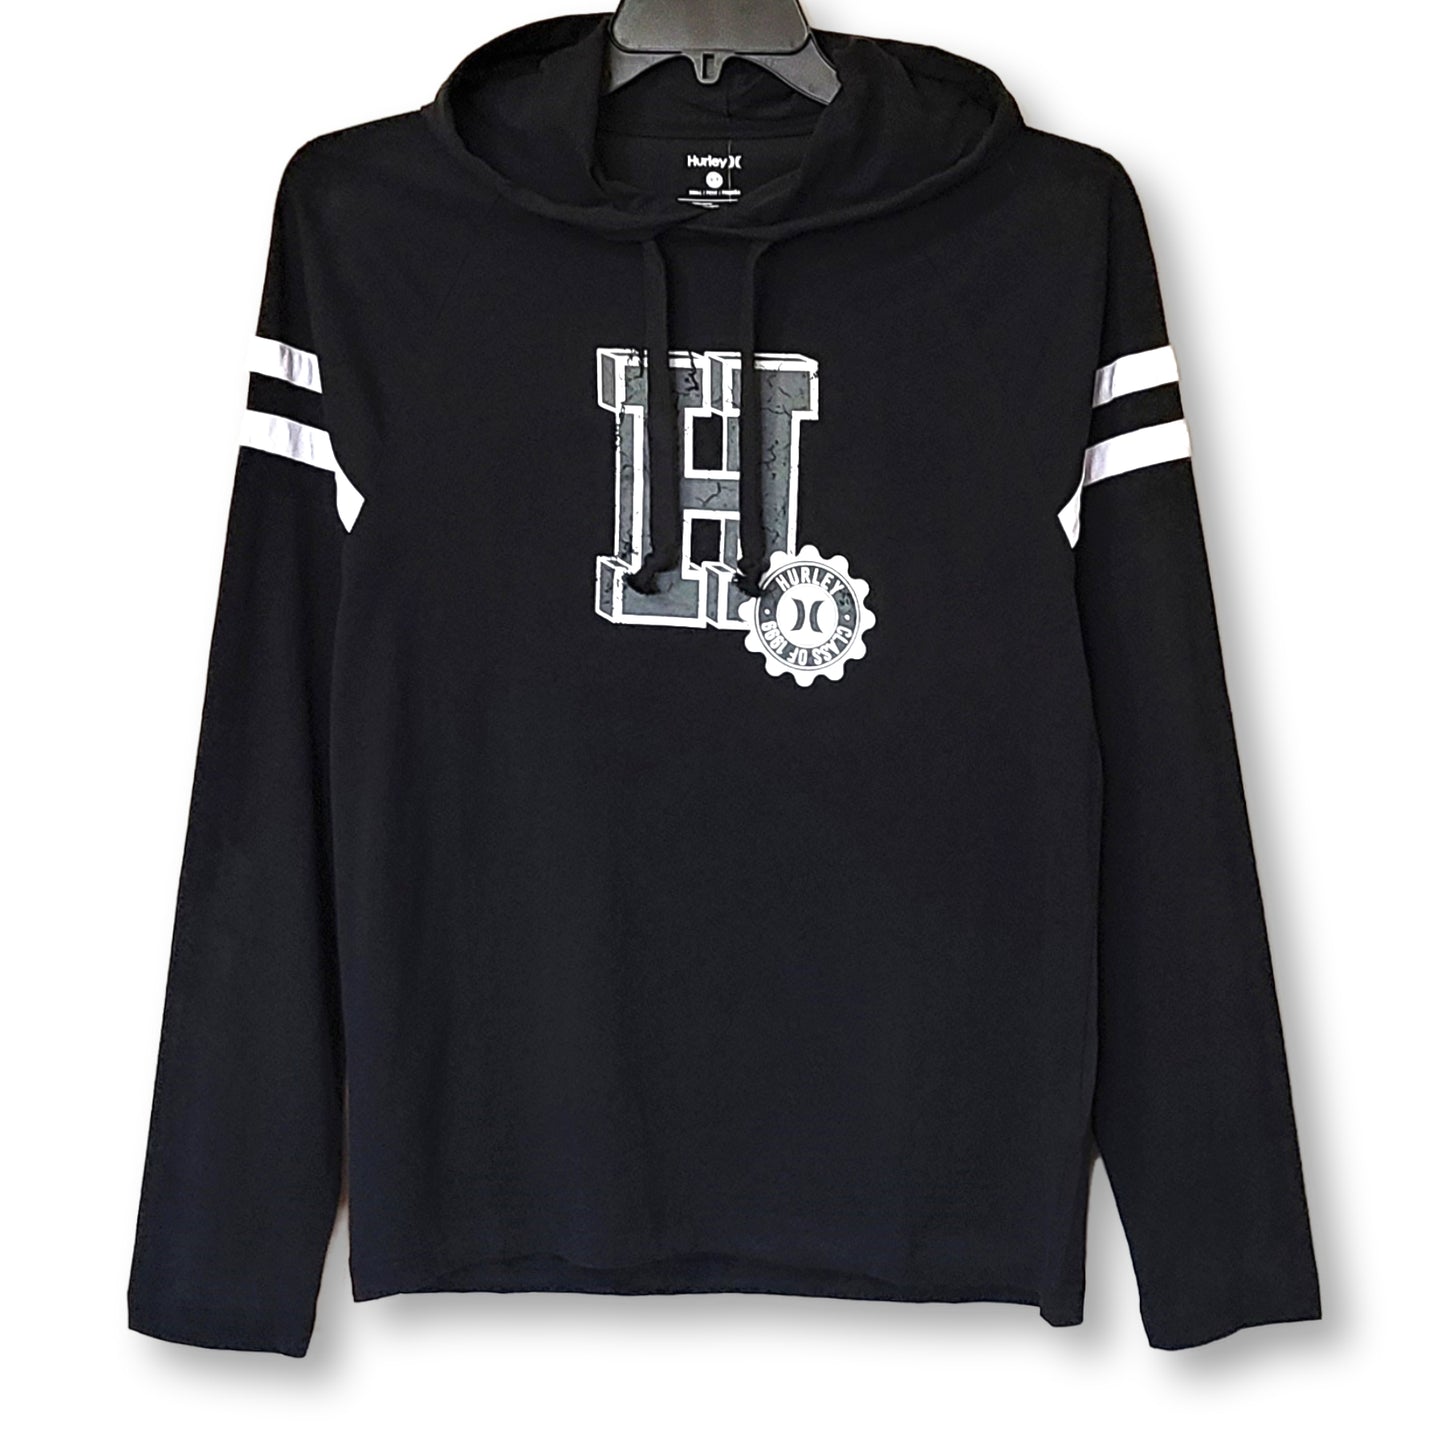 Hurley Graphic Logo Print Lightweight Cotton Long Sleeve T-Shirt Hoodie